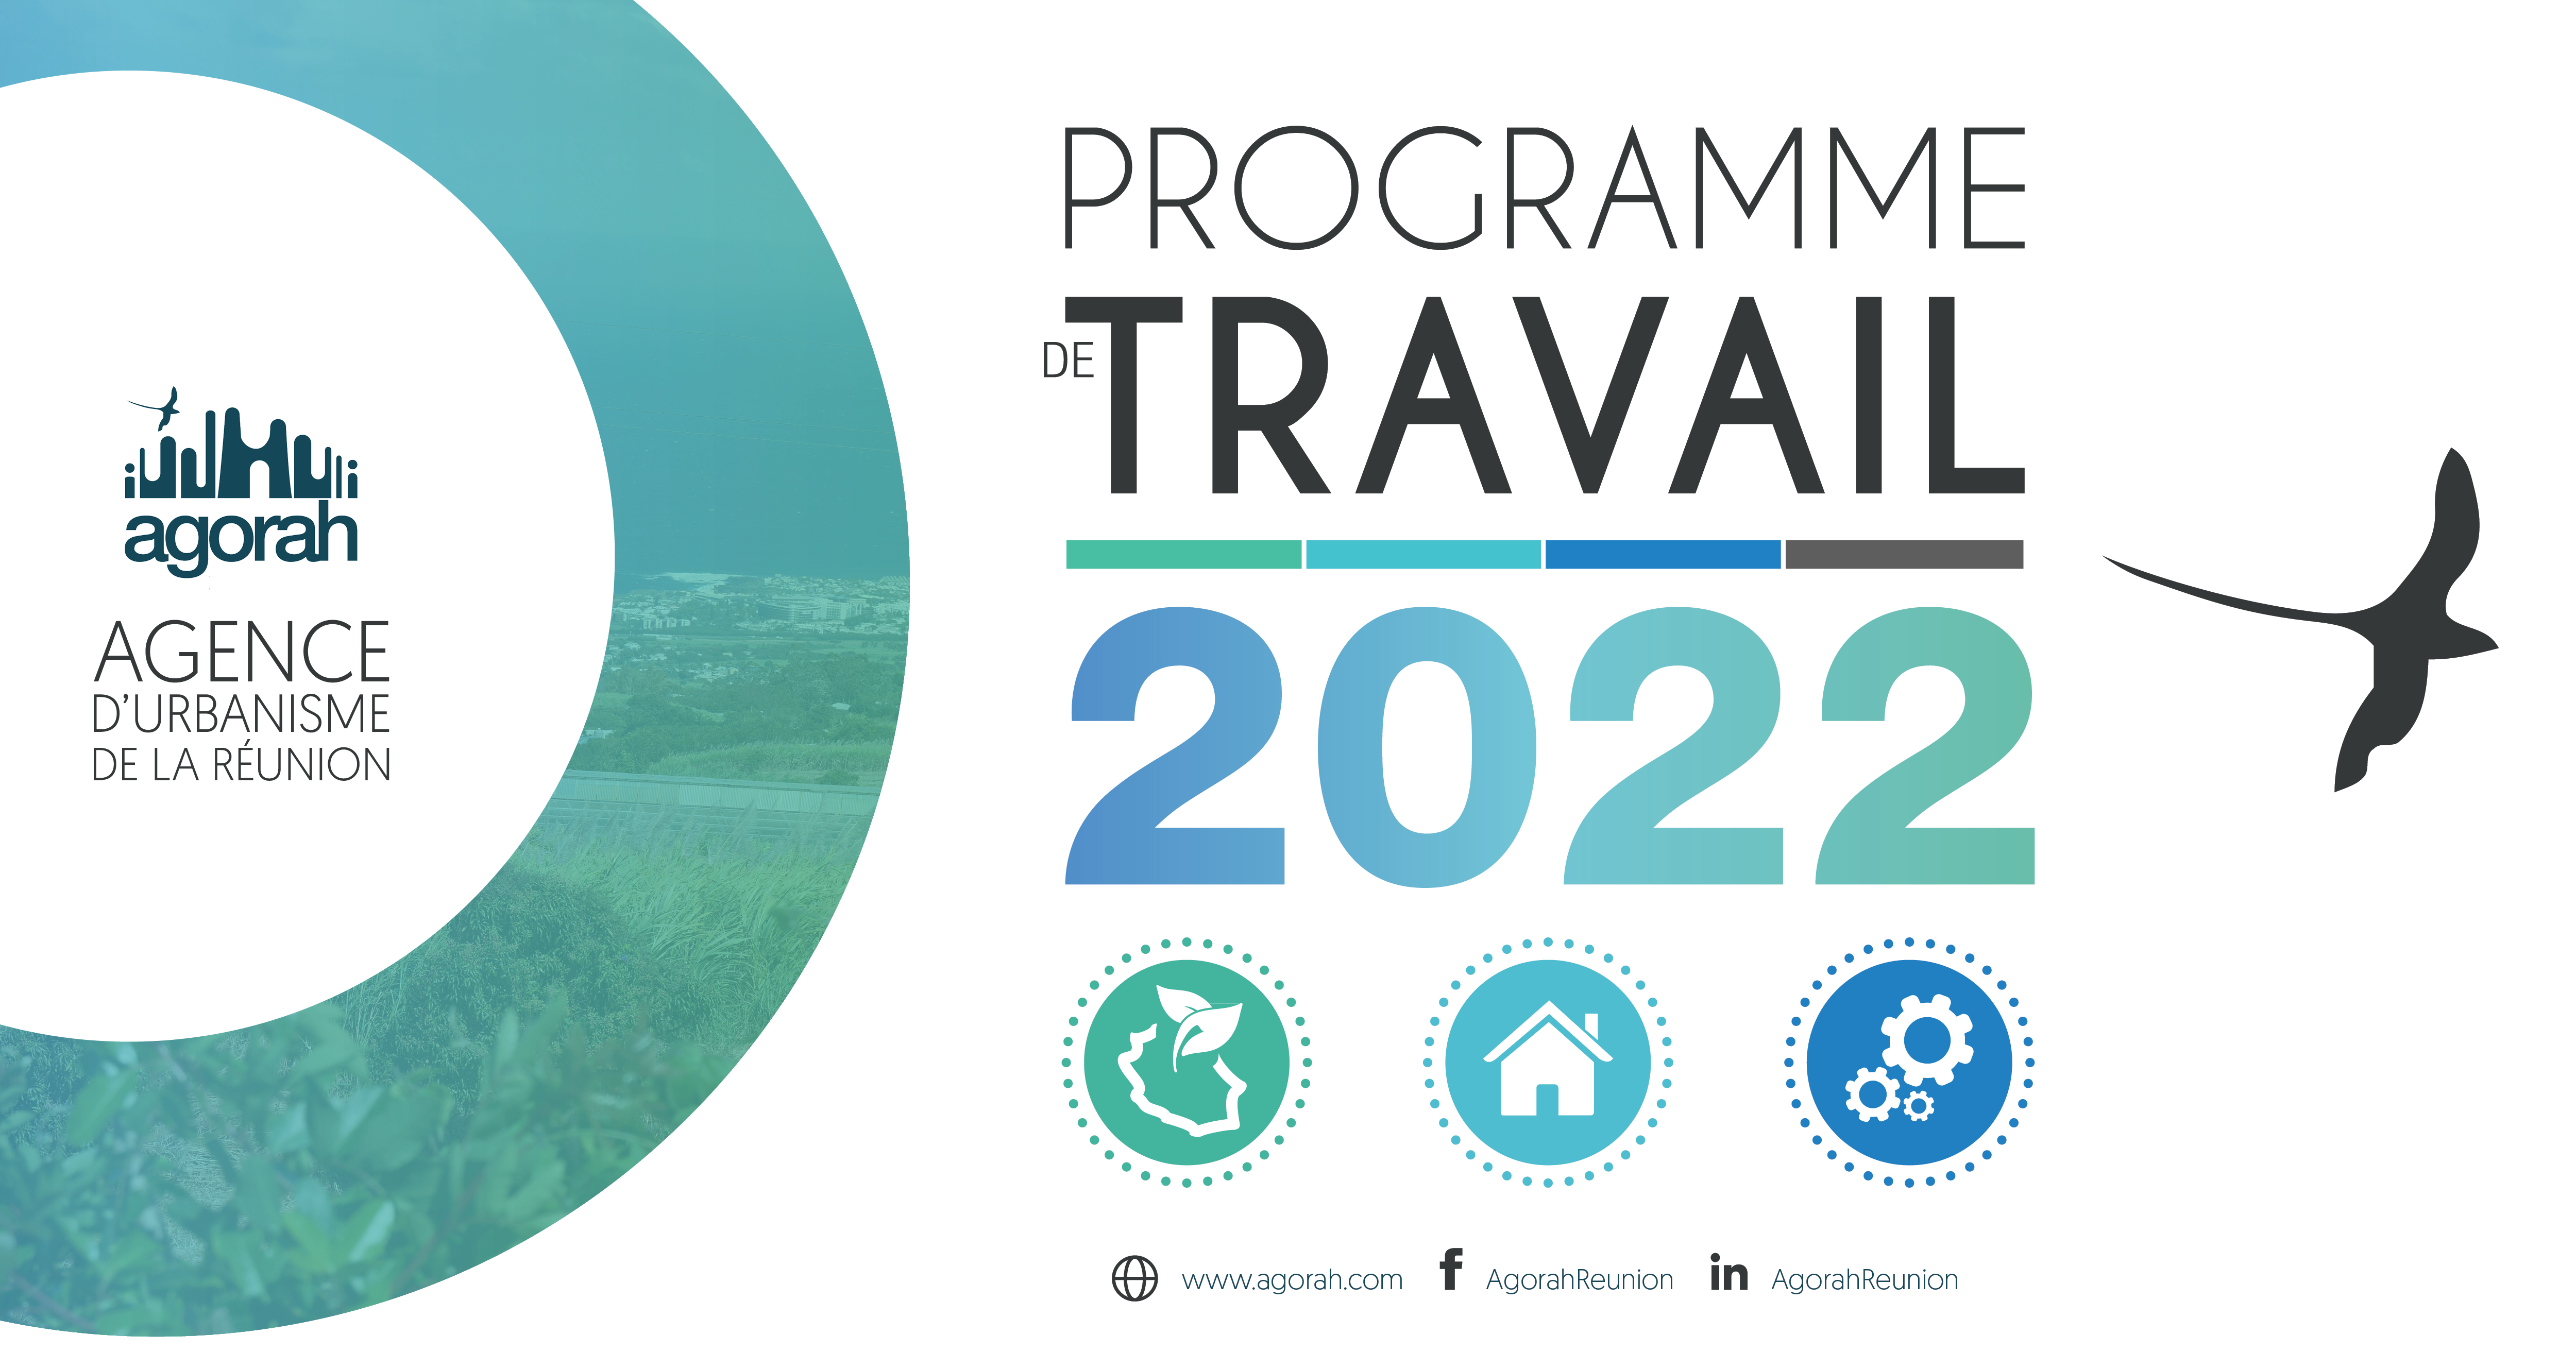 Programme de travail 2022